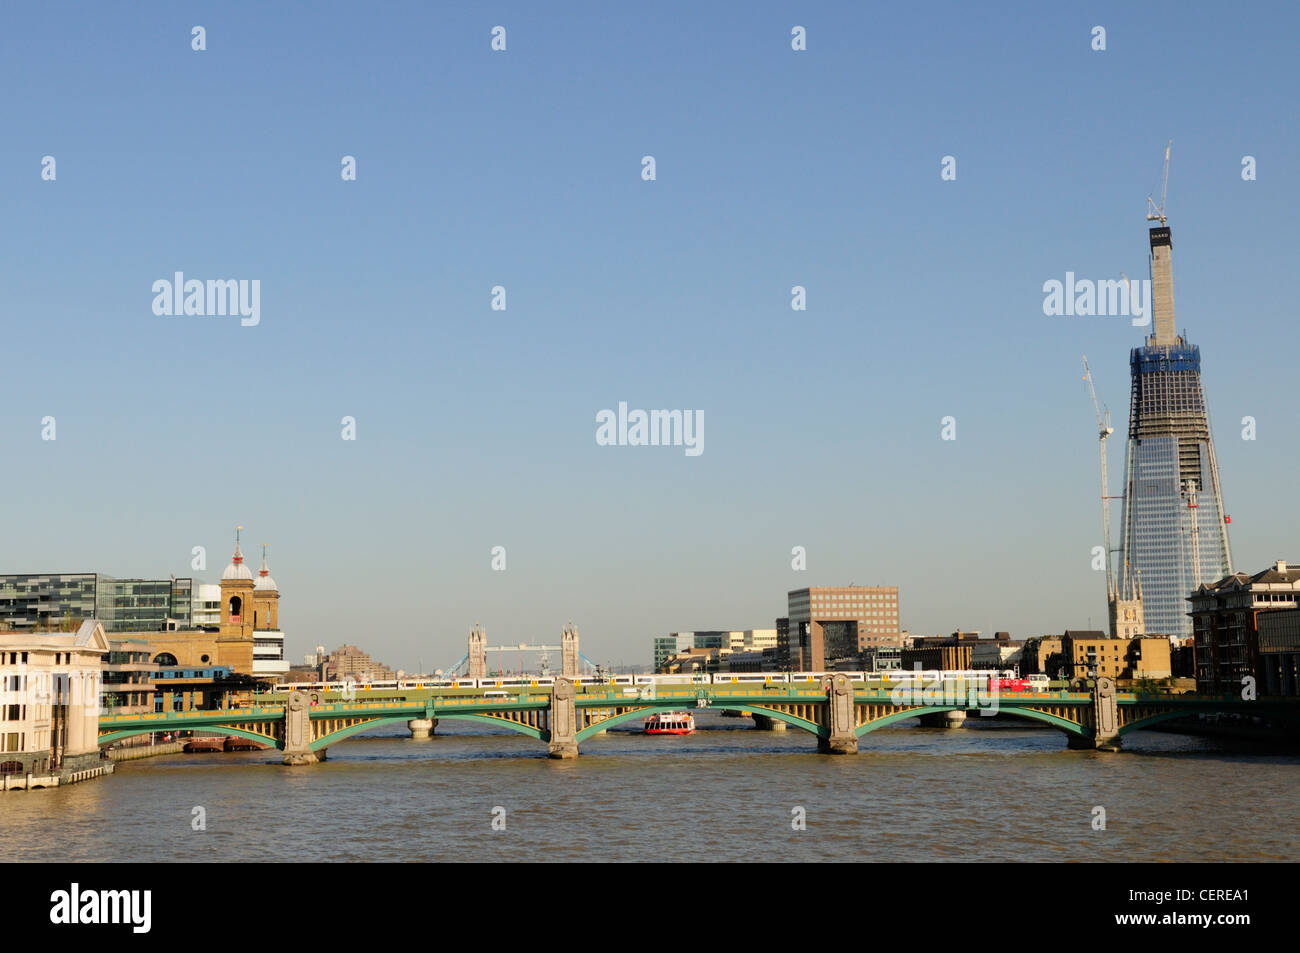 View along the River Thames towards Southwark Bridge and the Shard London Bridge. Stock Photo